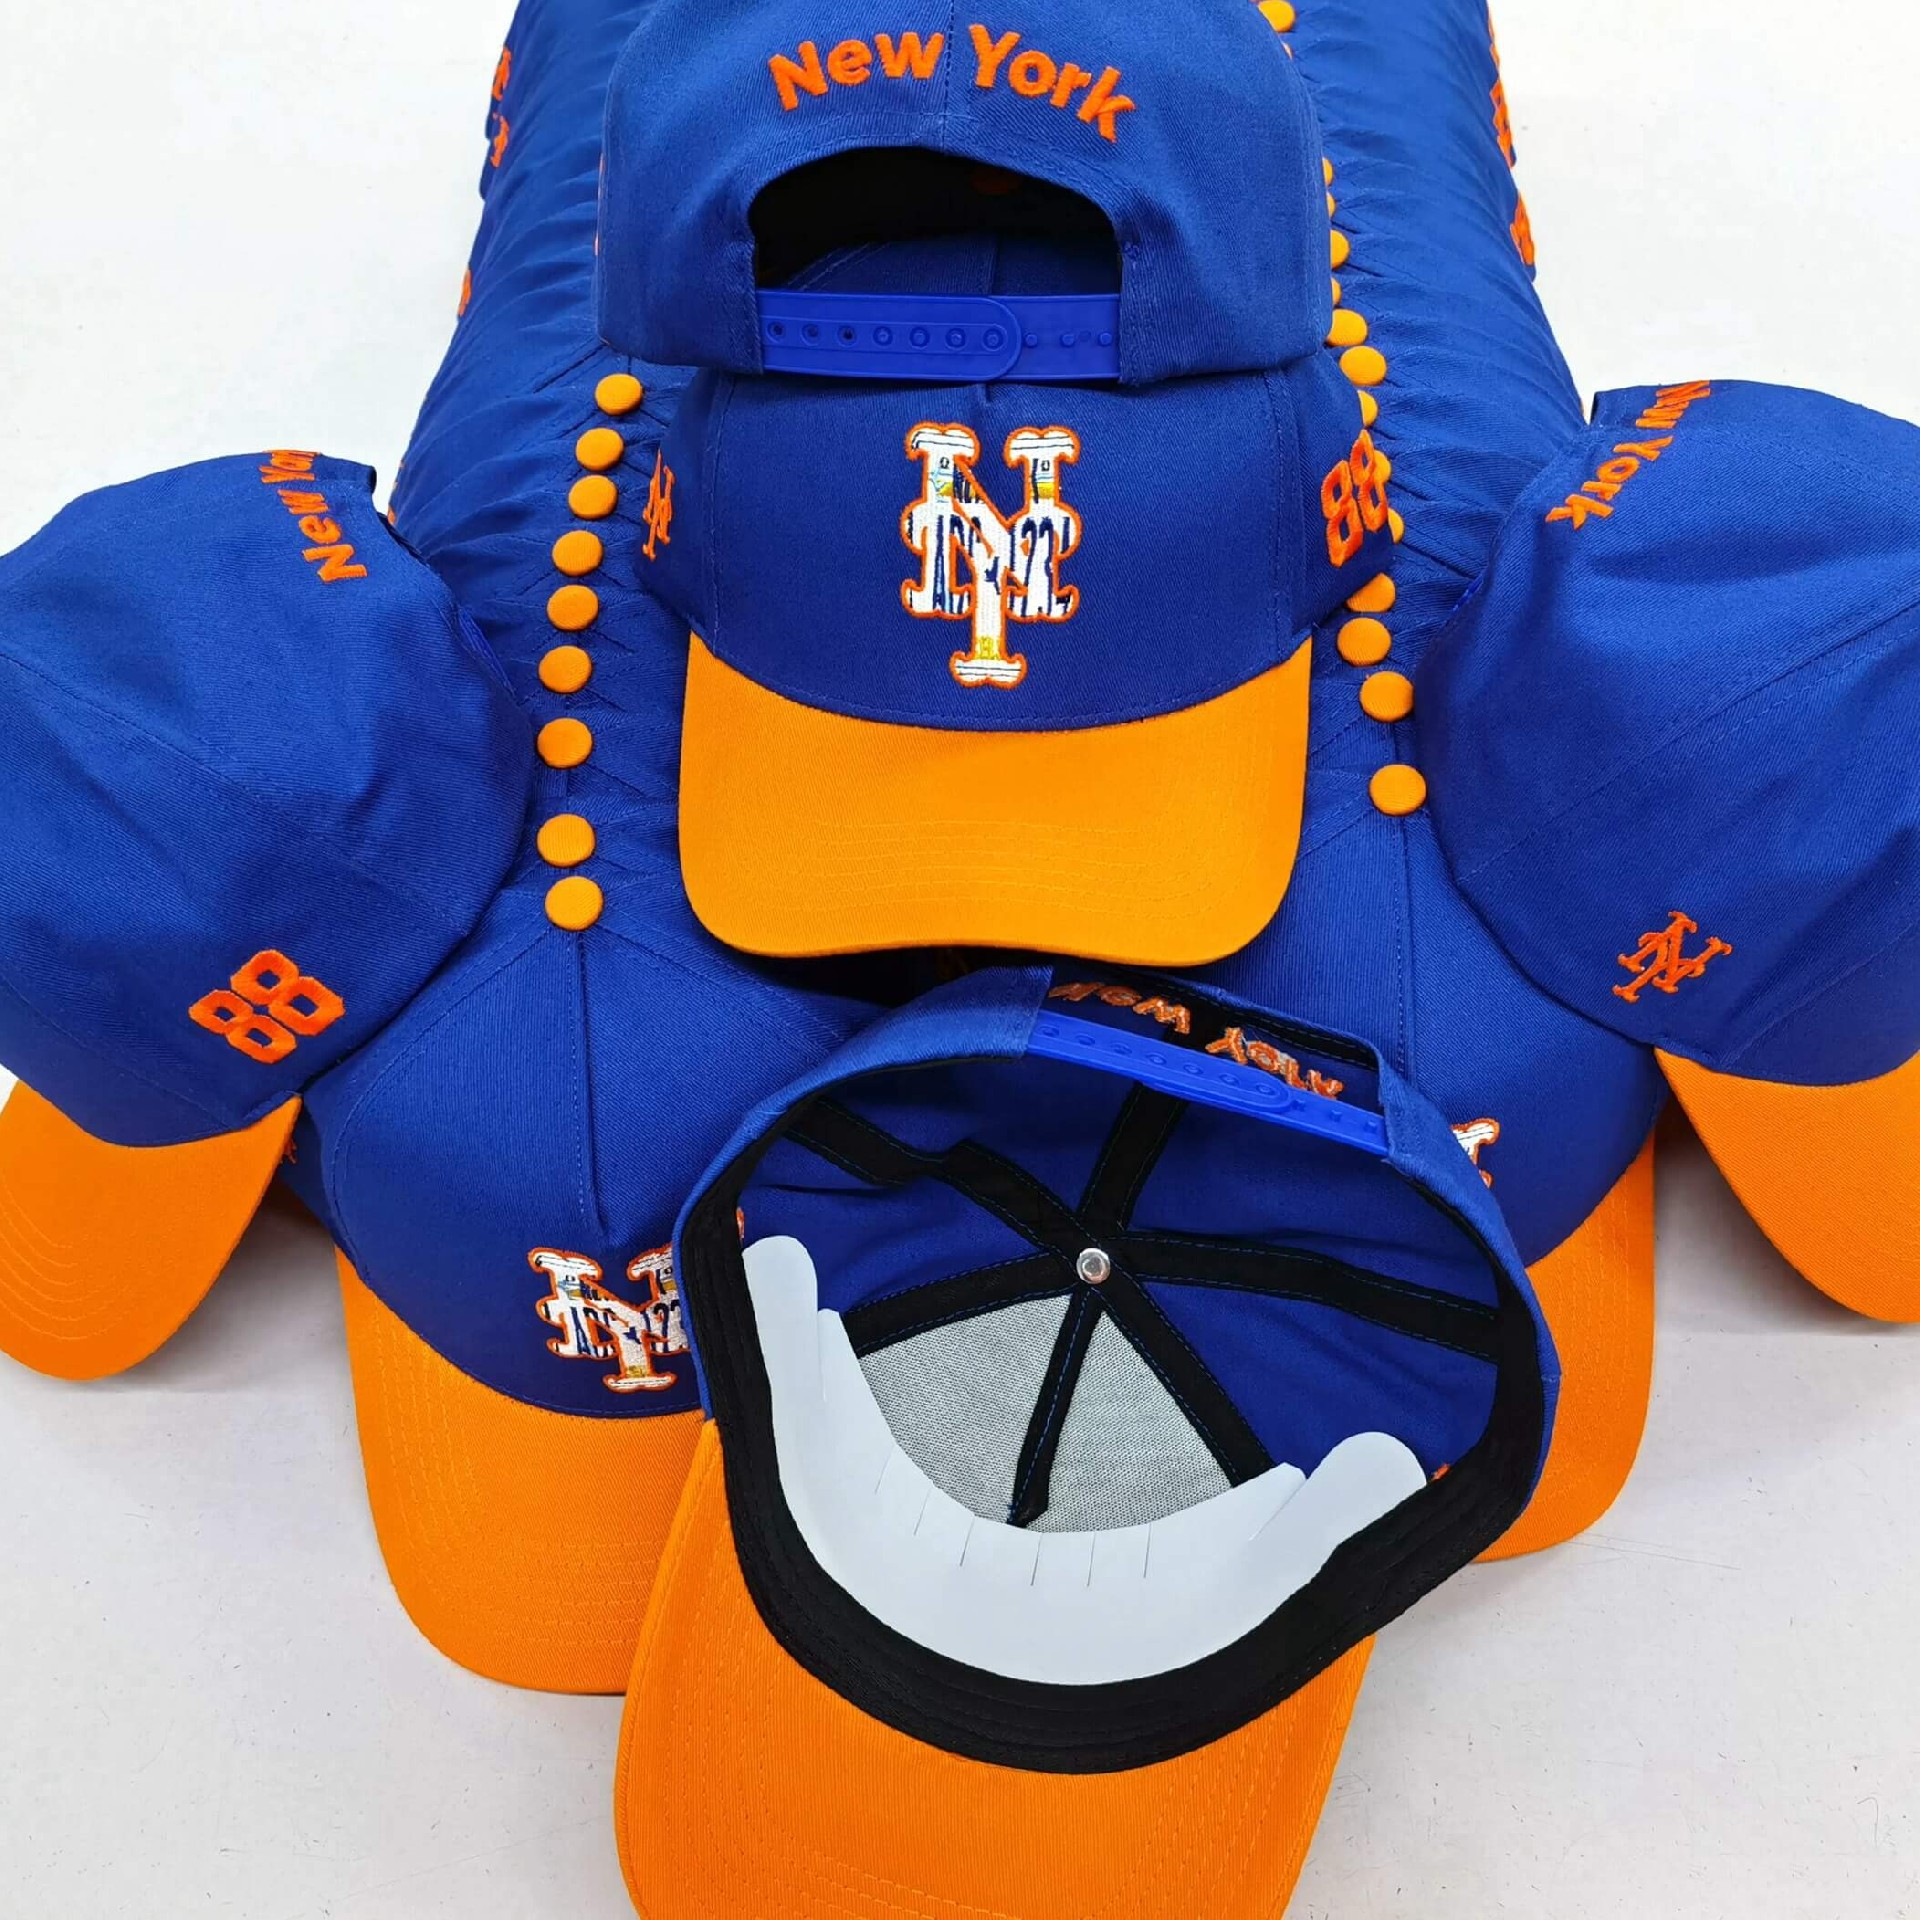 CMC-1141(  Two Tone Blue Orange 3D Embroidery Logo  Mens Women 5 Panel A Frame Baseball Cap Manufacturer)